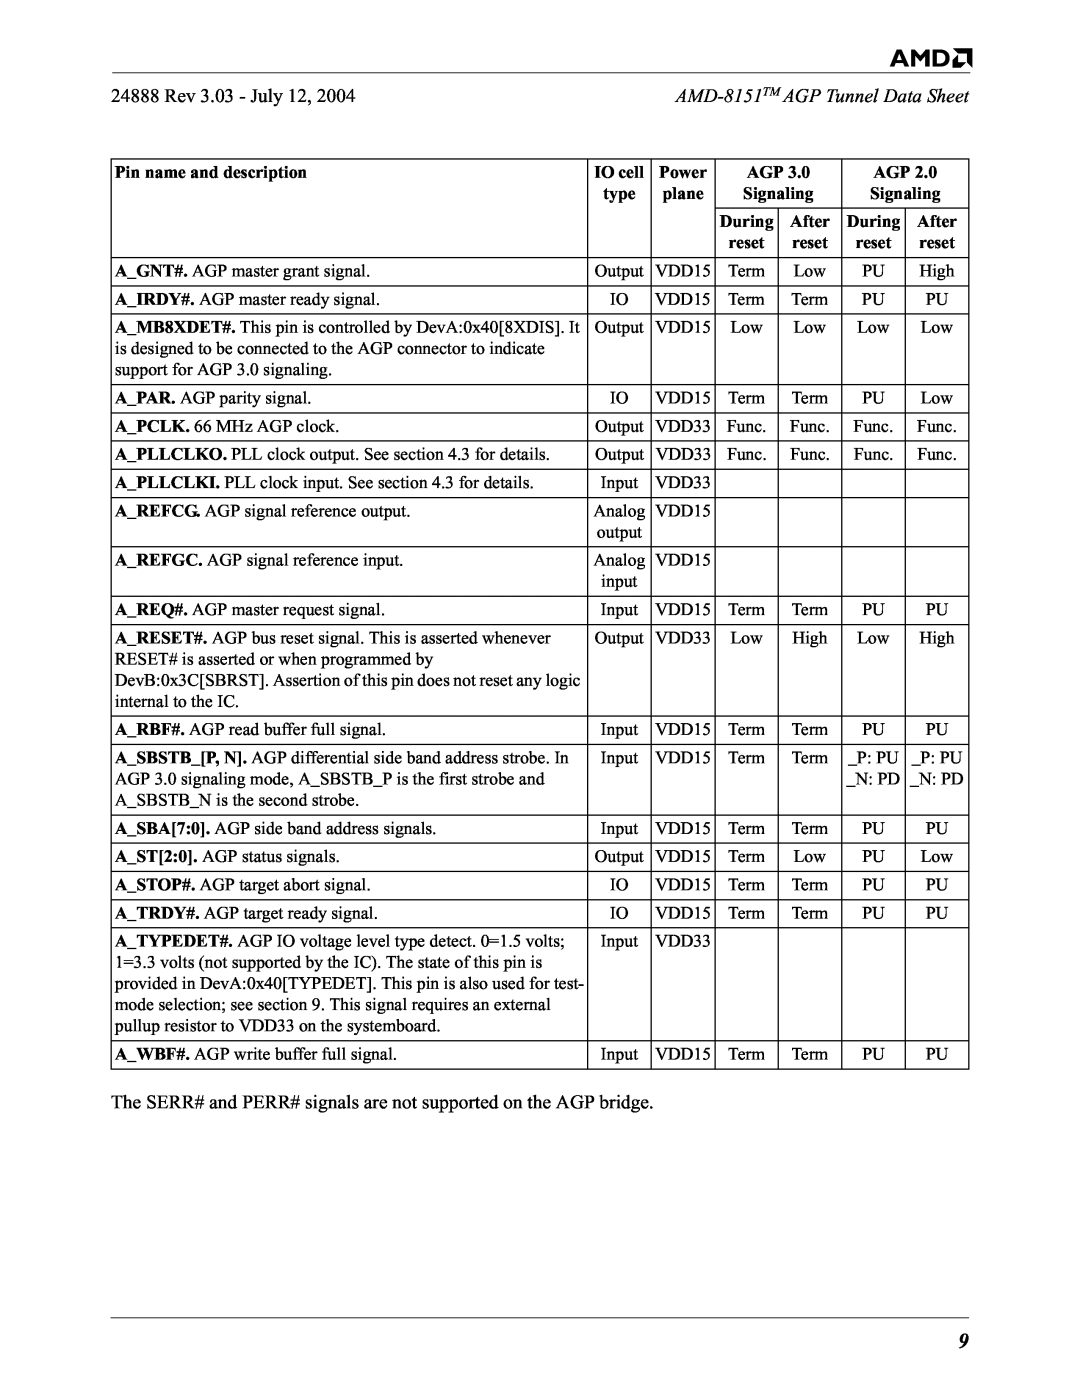 AMD specifications Rev 3.03 - July, AMD-8151TM AGP Tunnel Data Sheet 